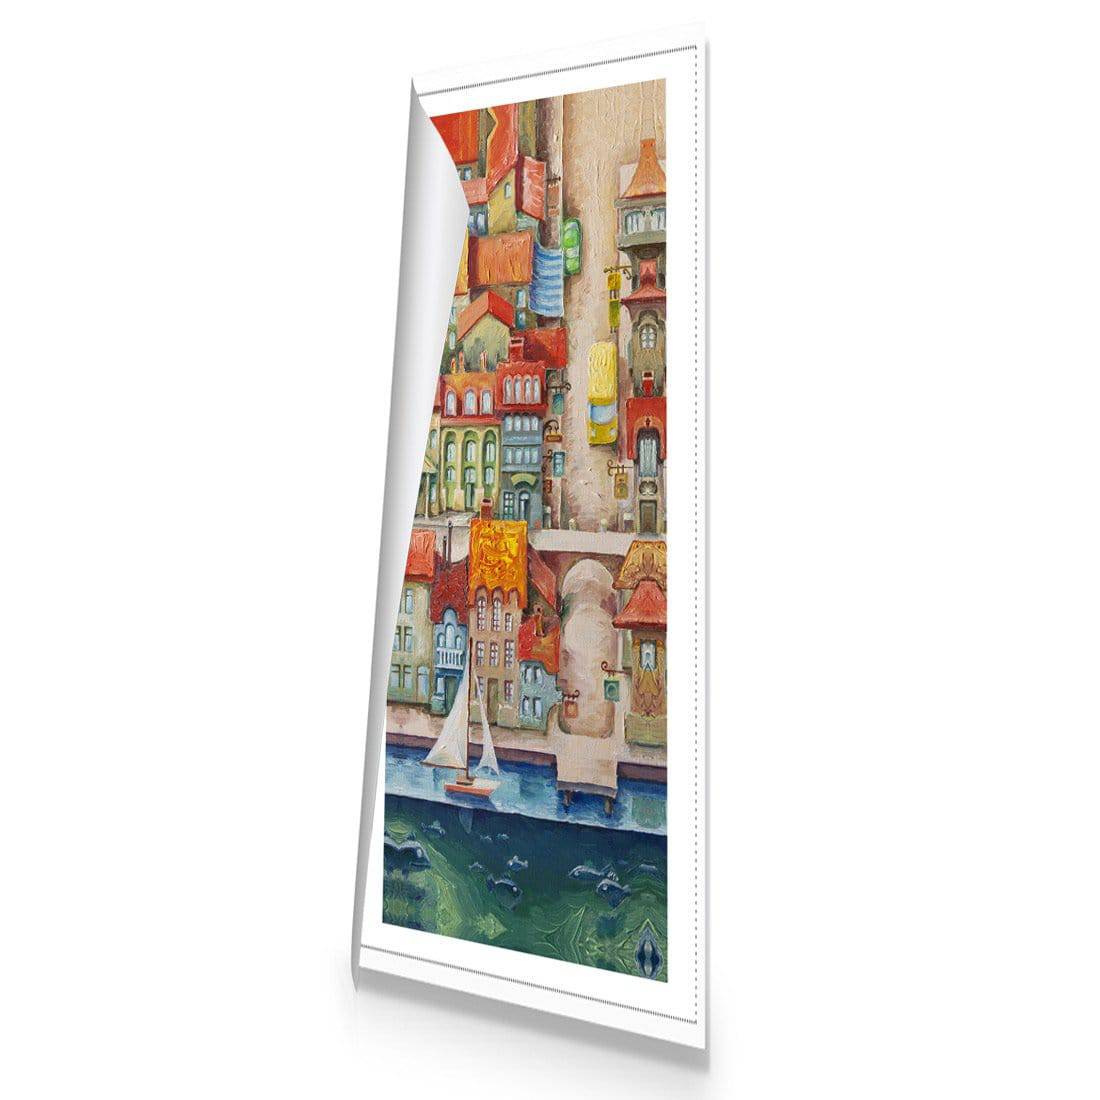 Toy Village Canvas Art-Canvas-Wall Art Designs-60x20cm-Rolled Canvas-Wall Art Designs